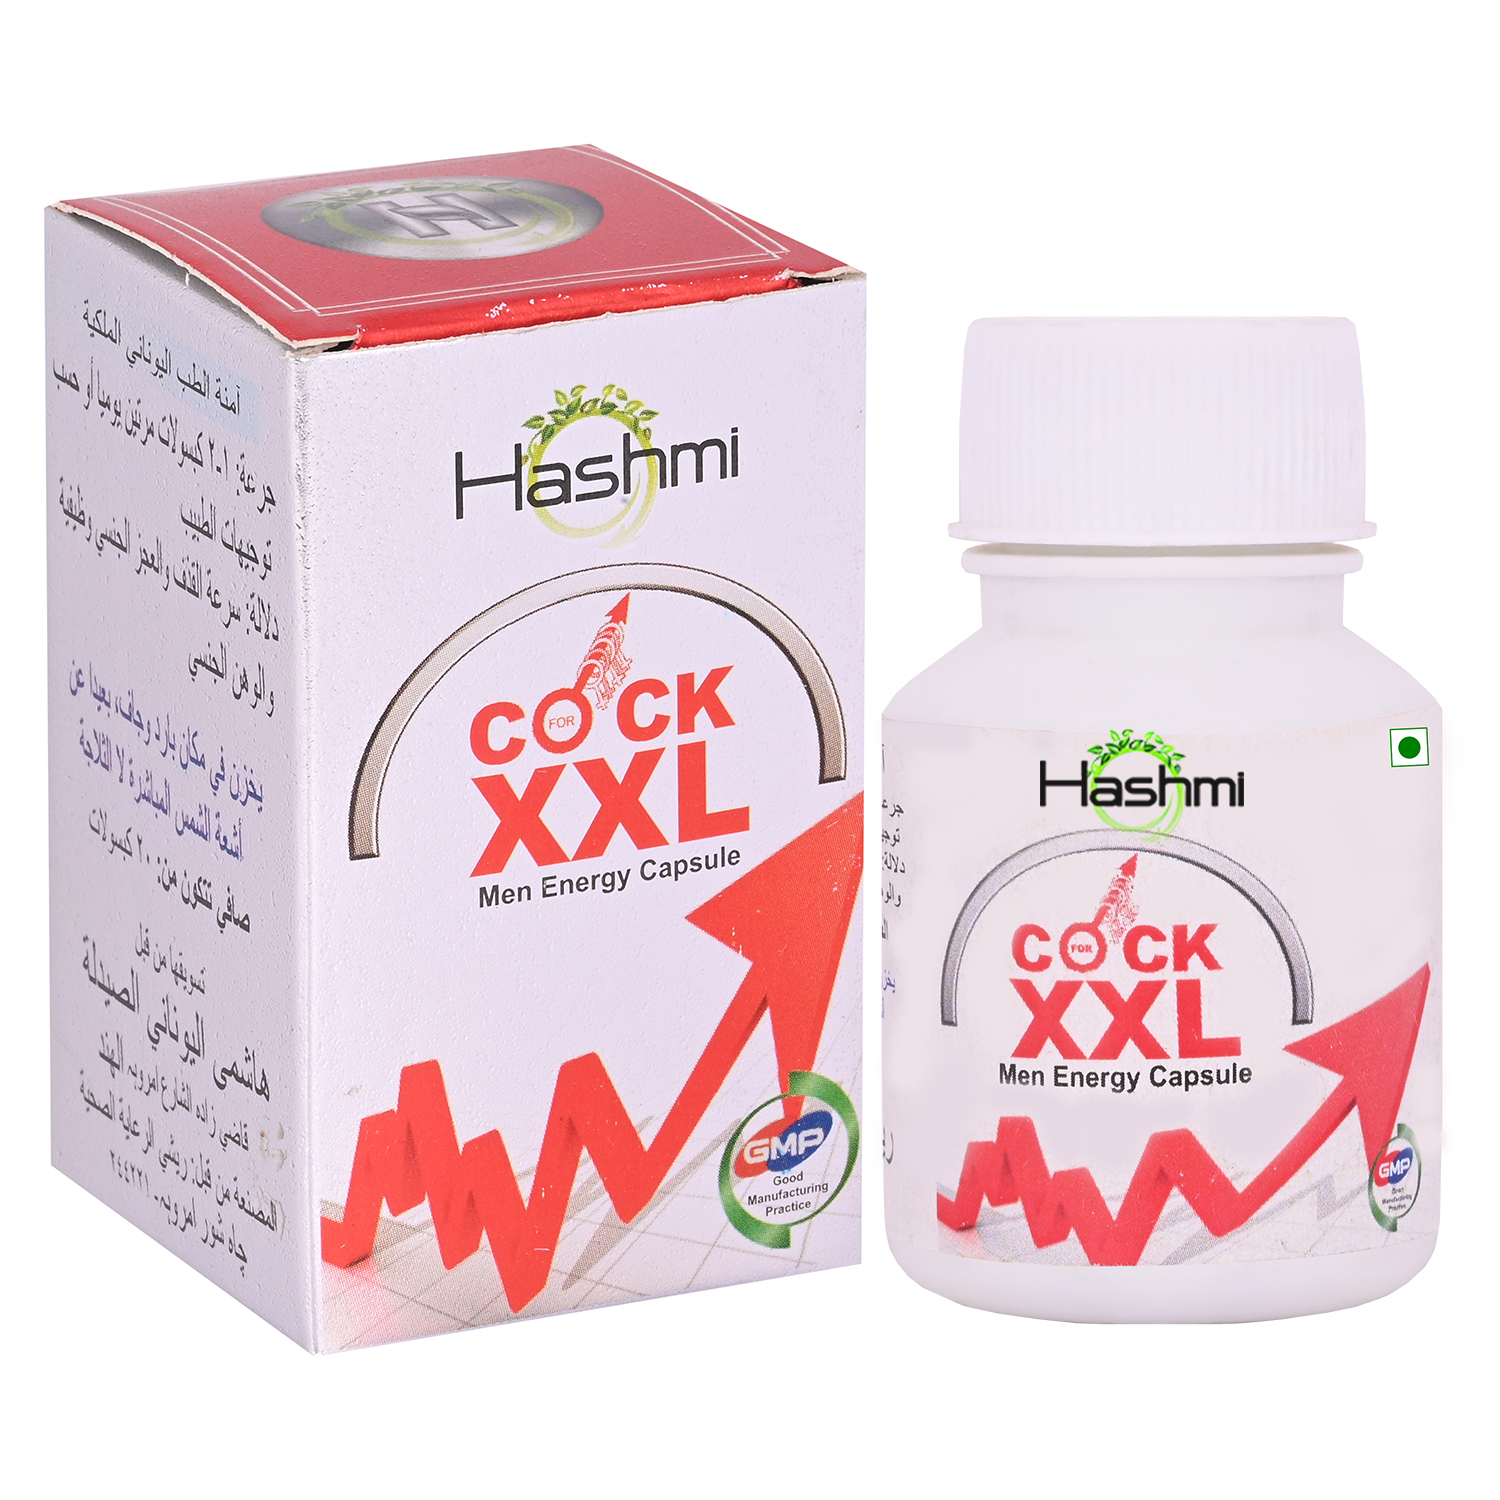 Hashmi cock xxl capsule